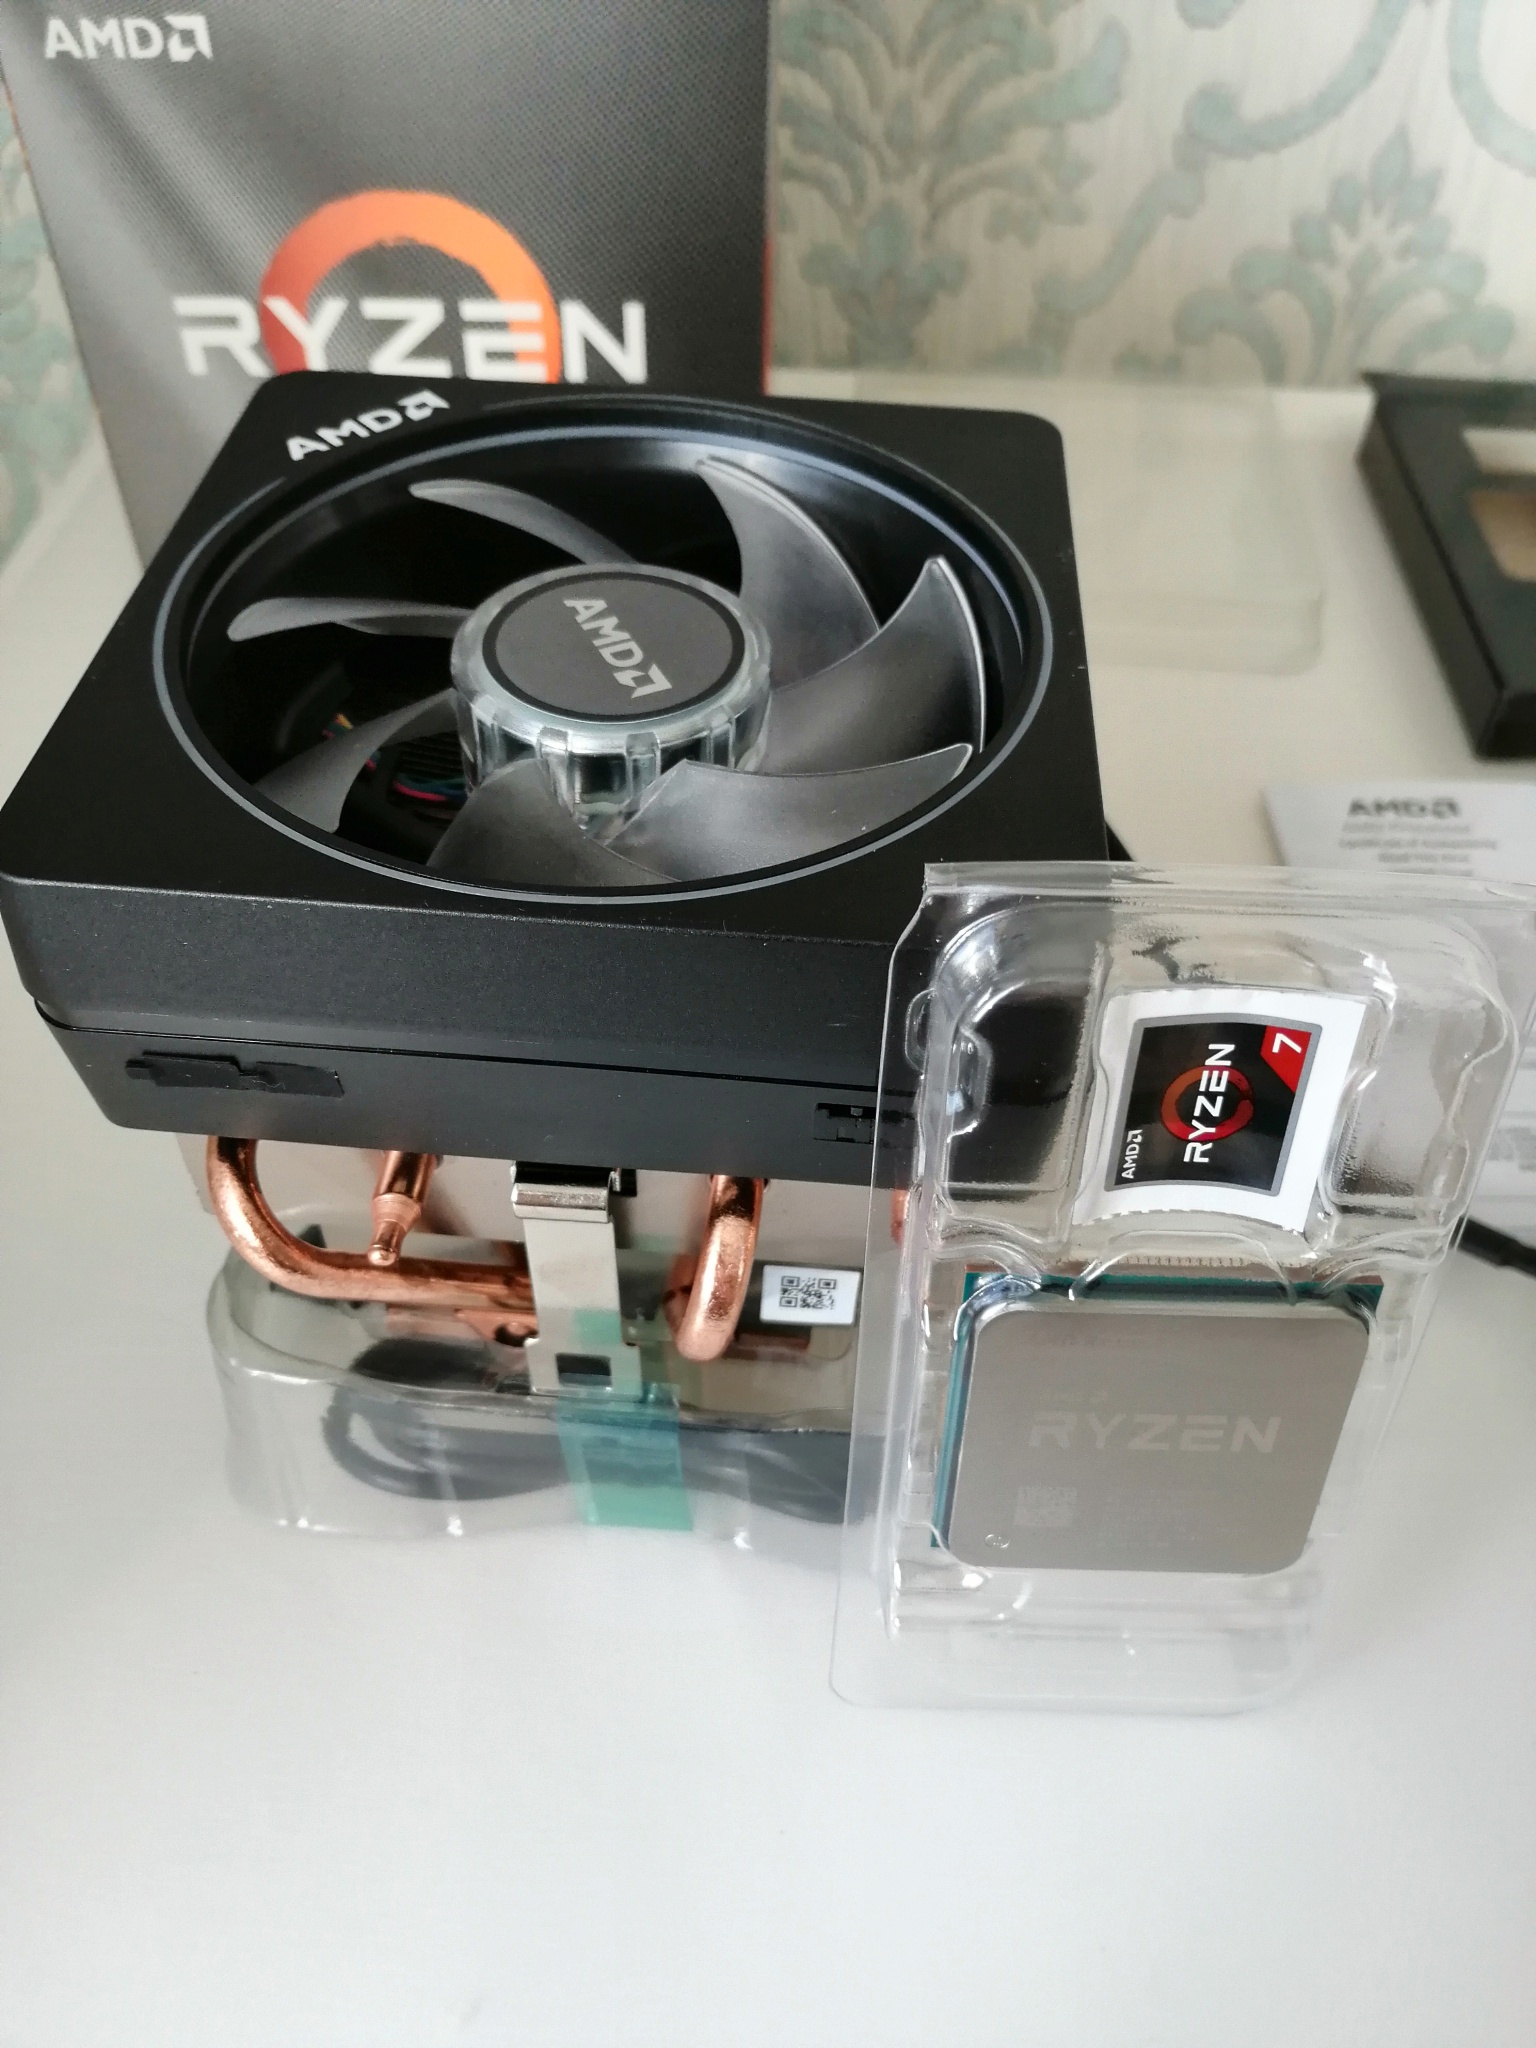 Кулер для 5700x. Процессор AMD Ryzen 7 3700x. AMD Ryzen 7 Pro 3700. R7 3700x. Ryzen 7 3700x Box кулер.